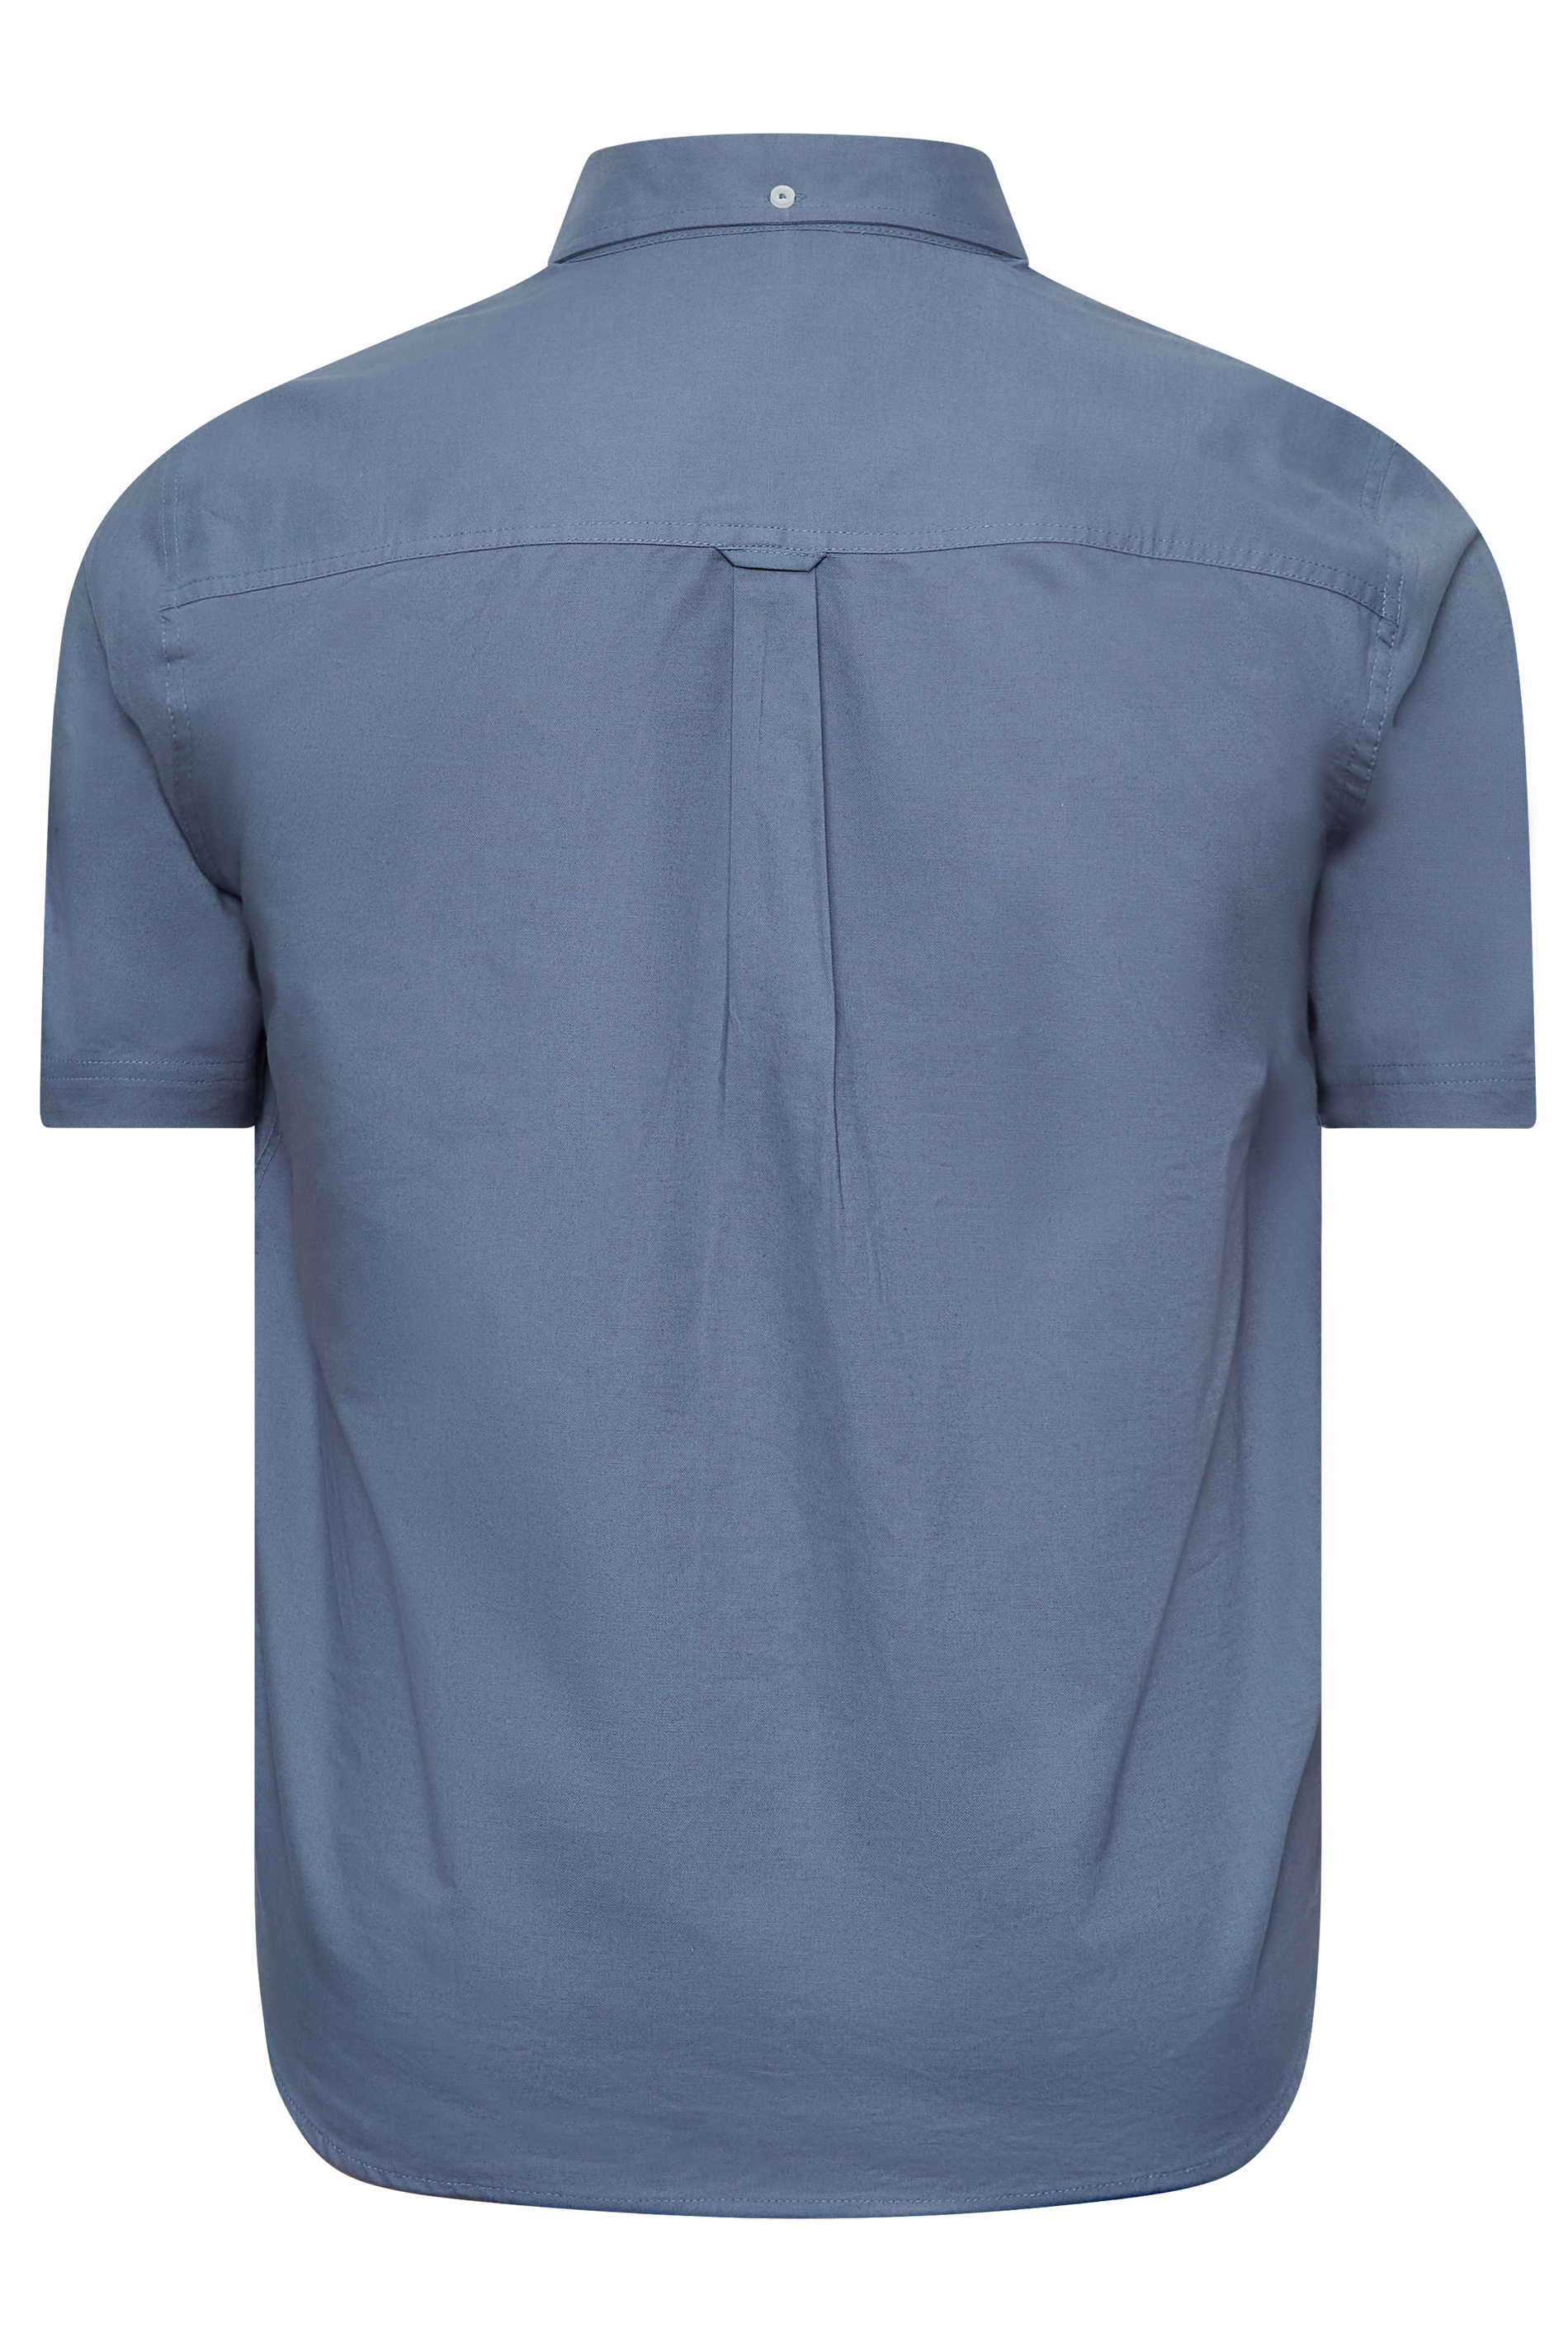 BadRhino Big & Tall Steel Blue Essential Short Sleeve Oxford Shirt | BadRhino 3